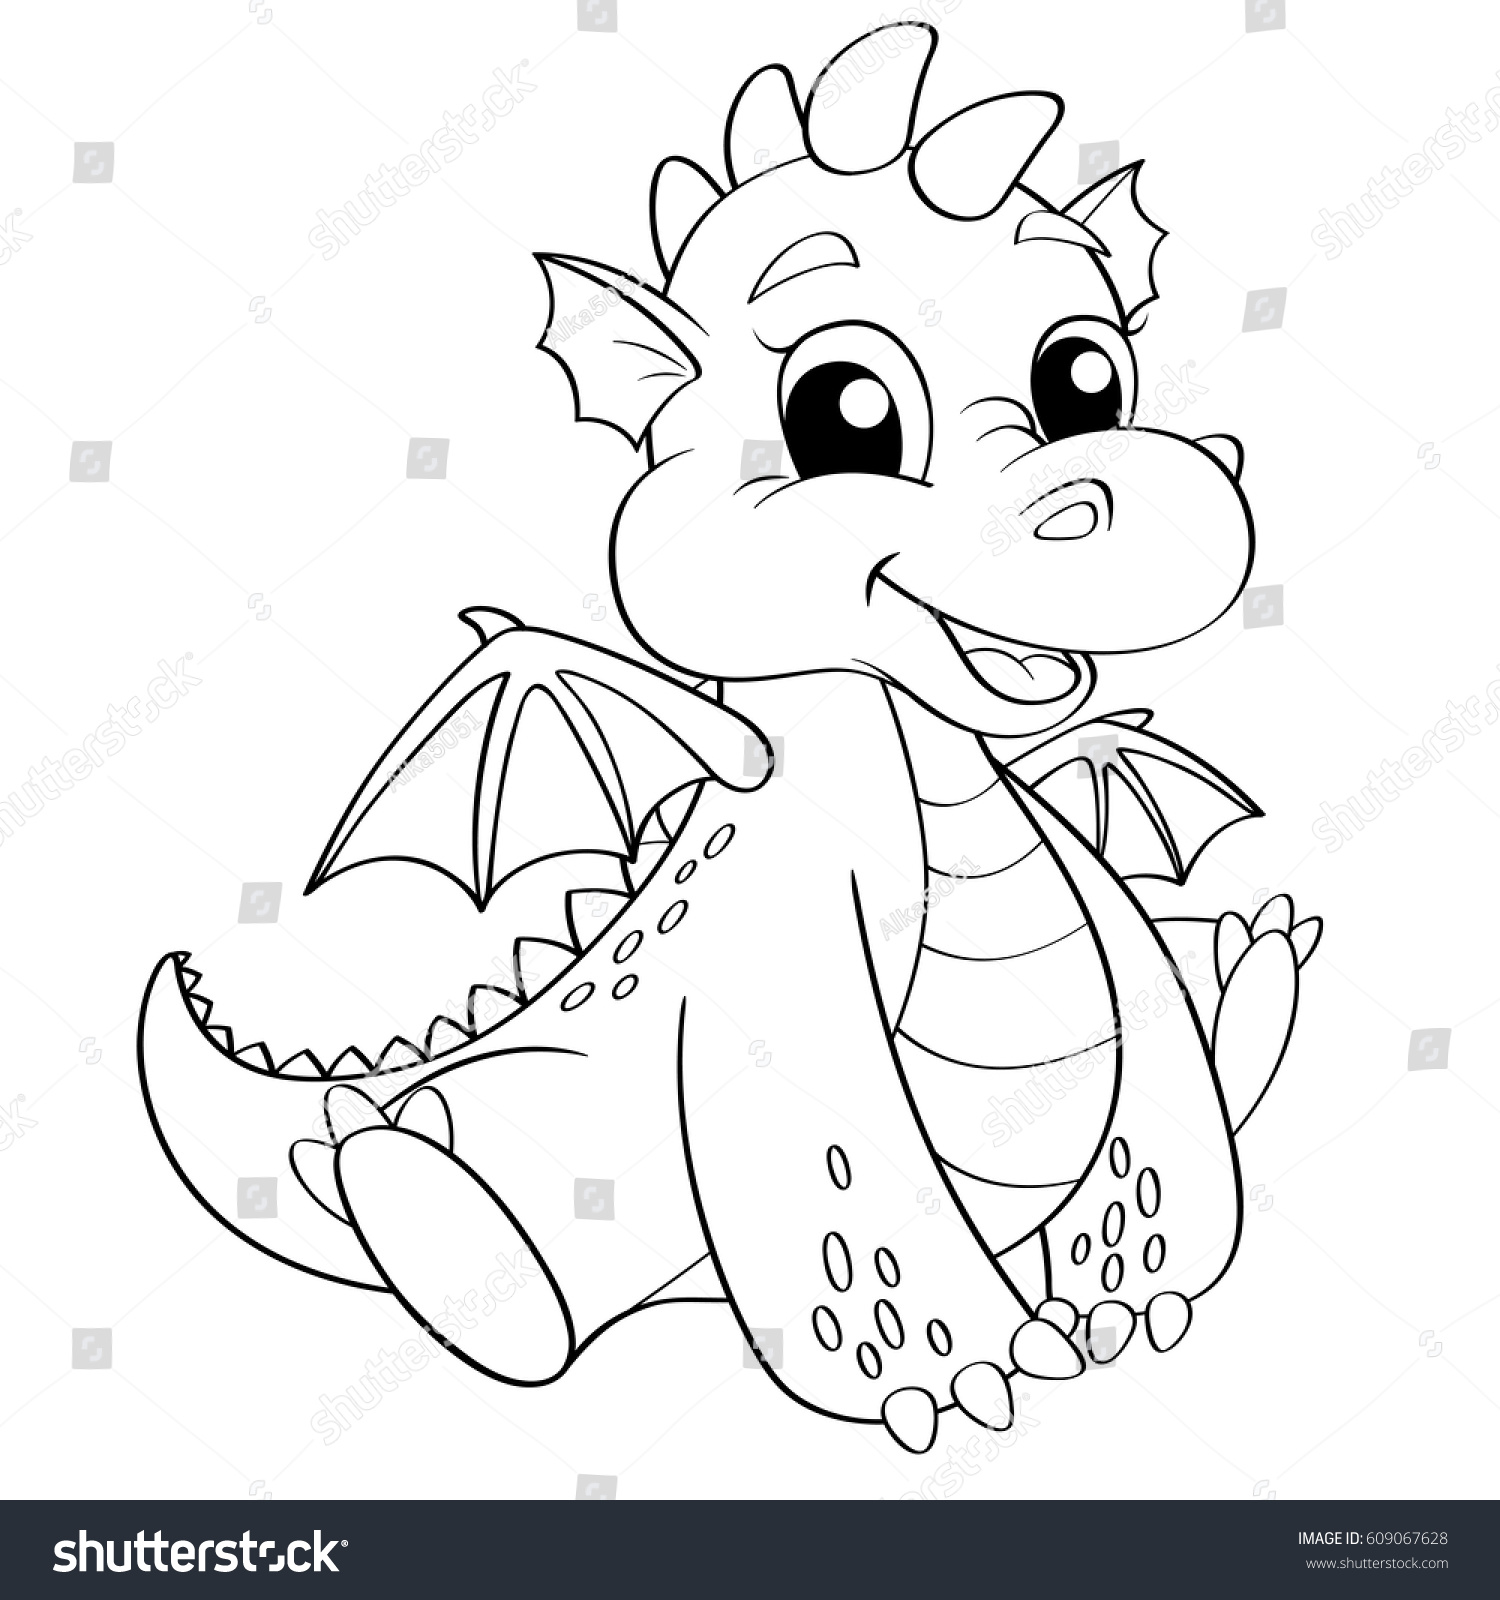 Cute Cartoon Dragon Black White Vector Stock Vector Royalty Free ...